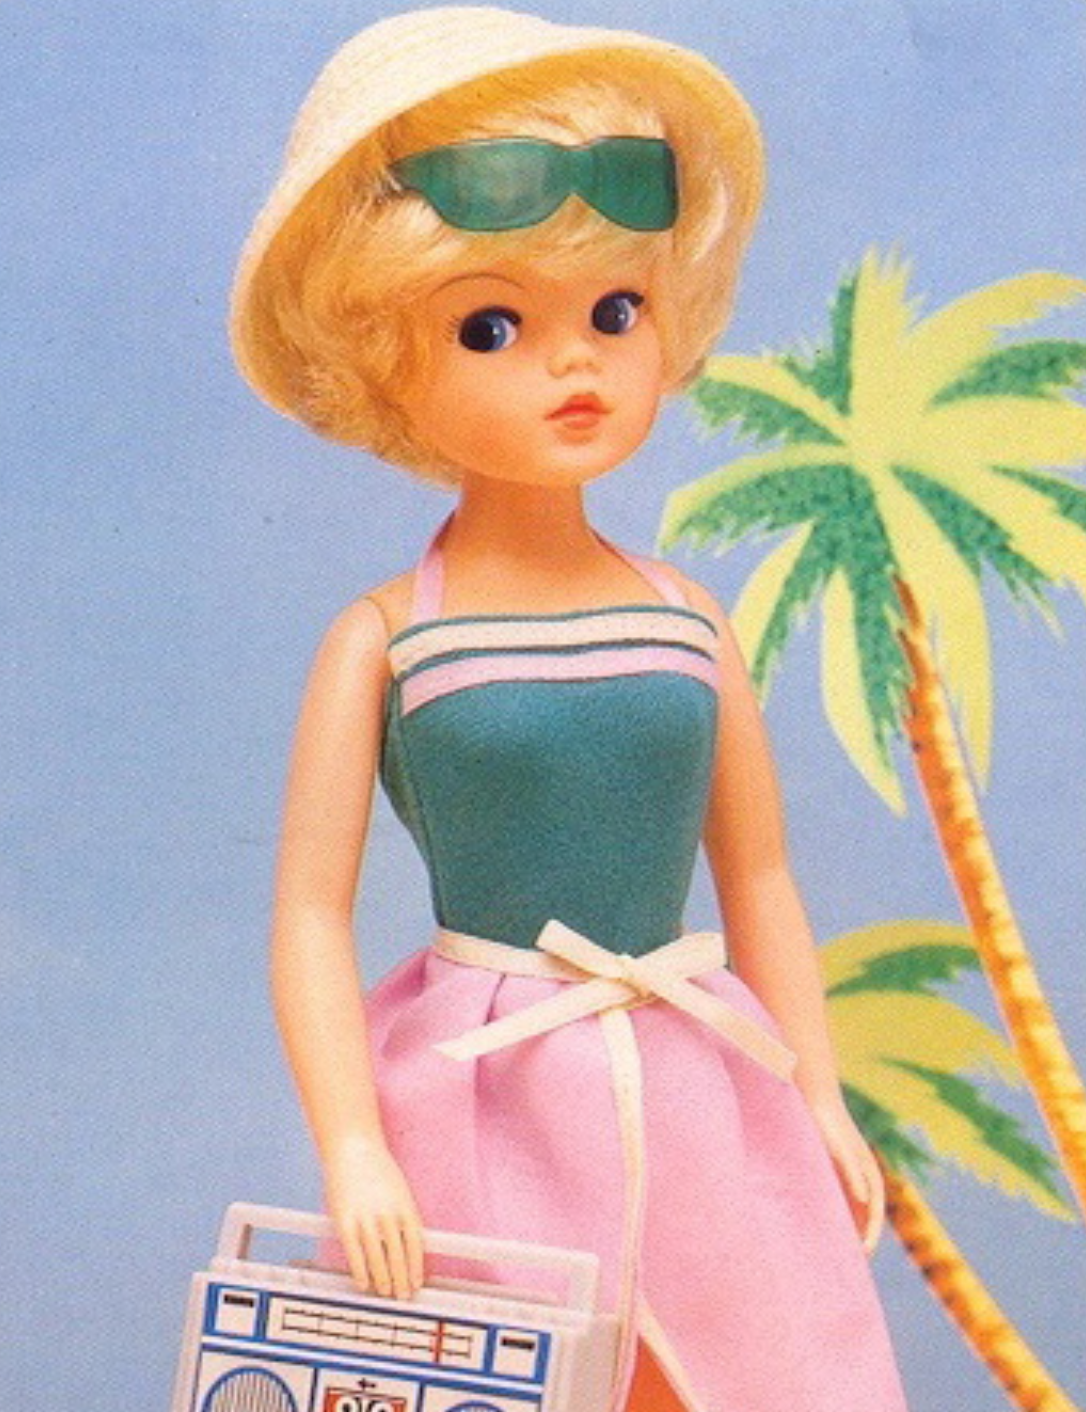 1983 Pedigree Sindy Holiday Girl Fashion Doll